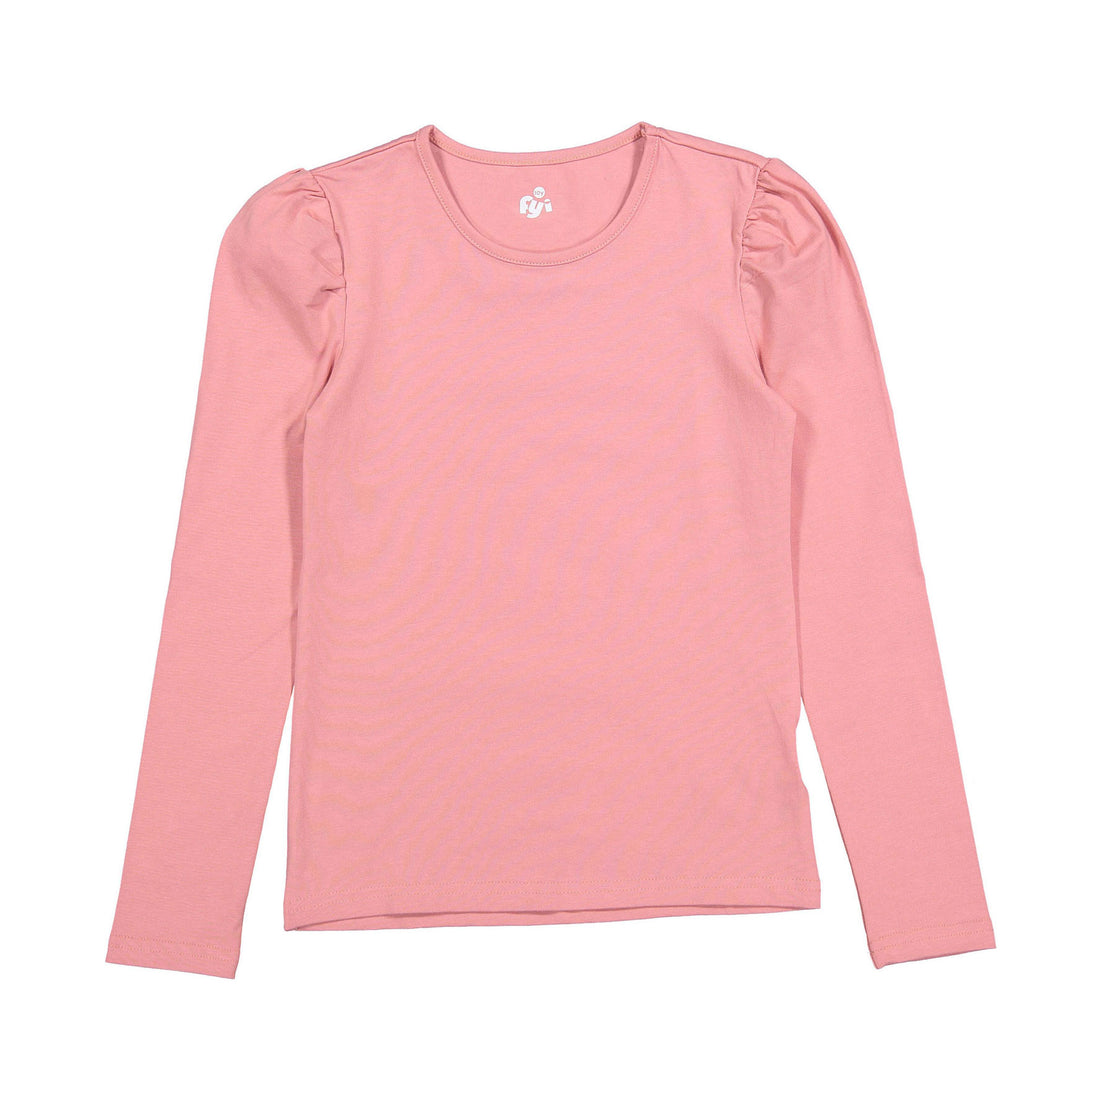 FYI Bright Pink Puff Sleeve T-shirt